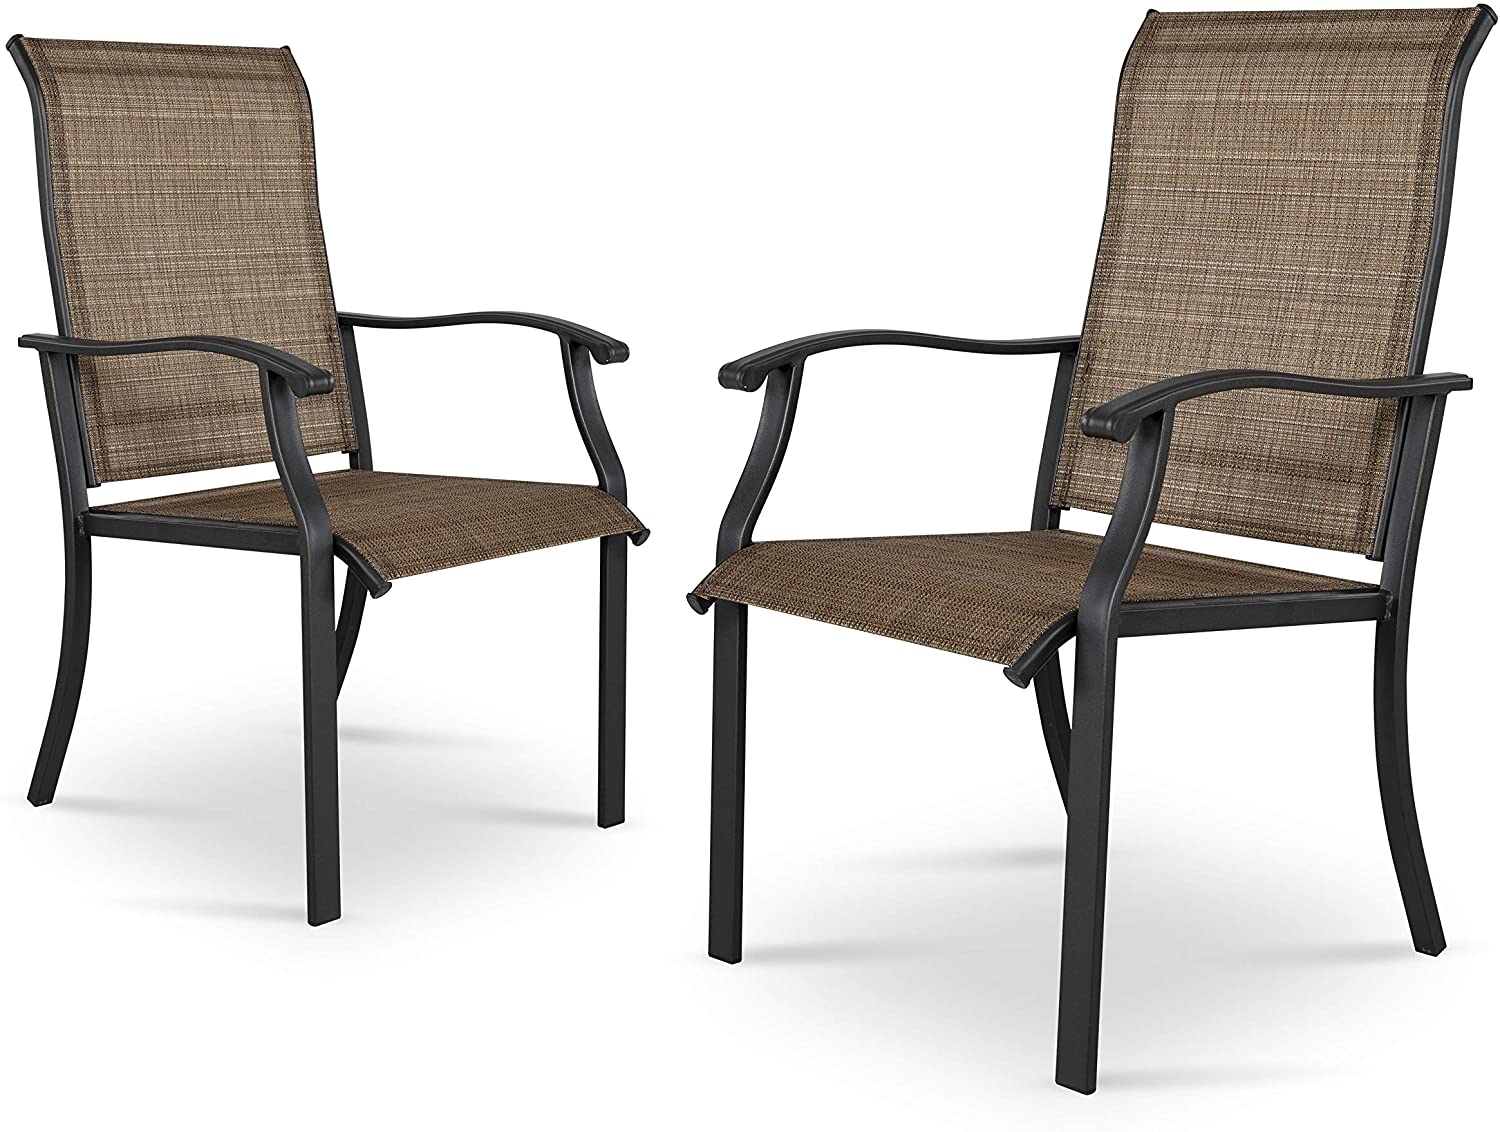 Nuu Garden Outdoor Dining Chairs Set